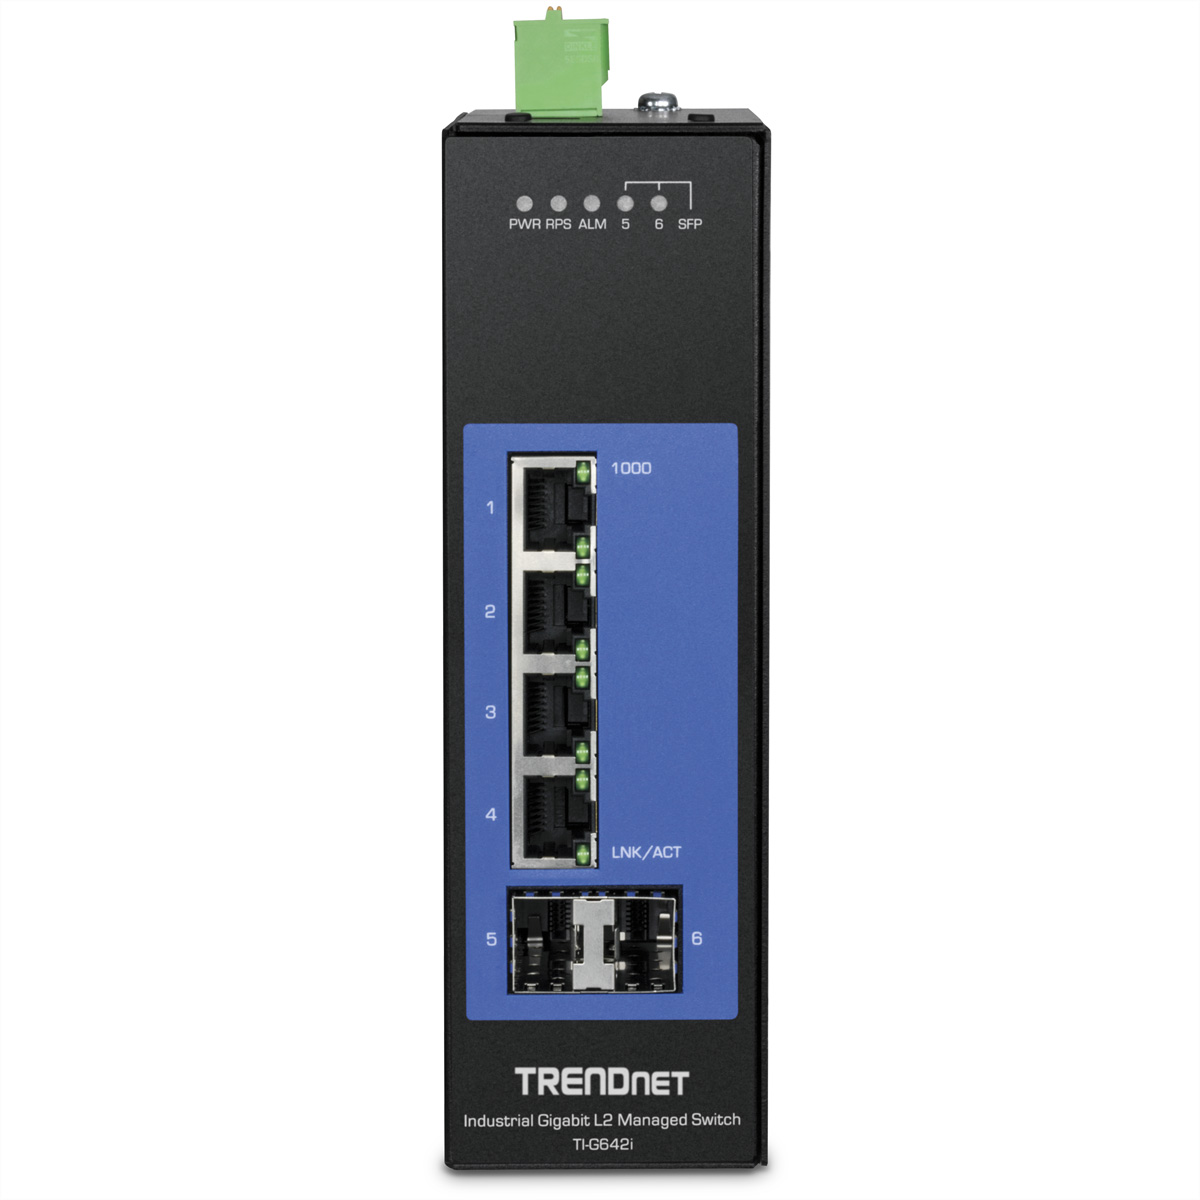 TRENDNET TI-G642i DIN-Rail Industrial Switch L2 Switch Gigabit 6-Port Ethernet Gigabit